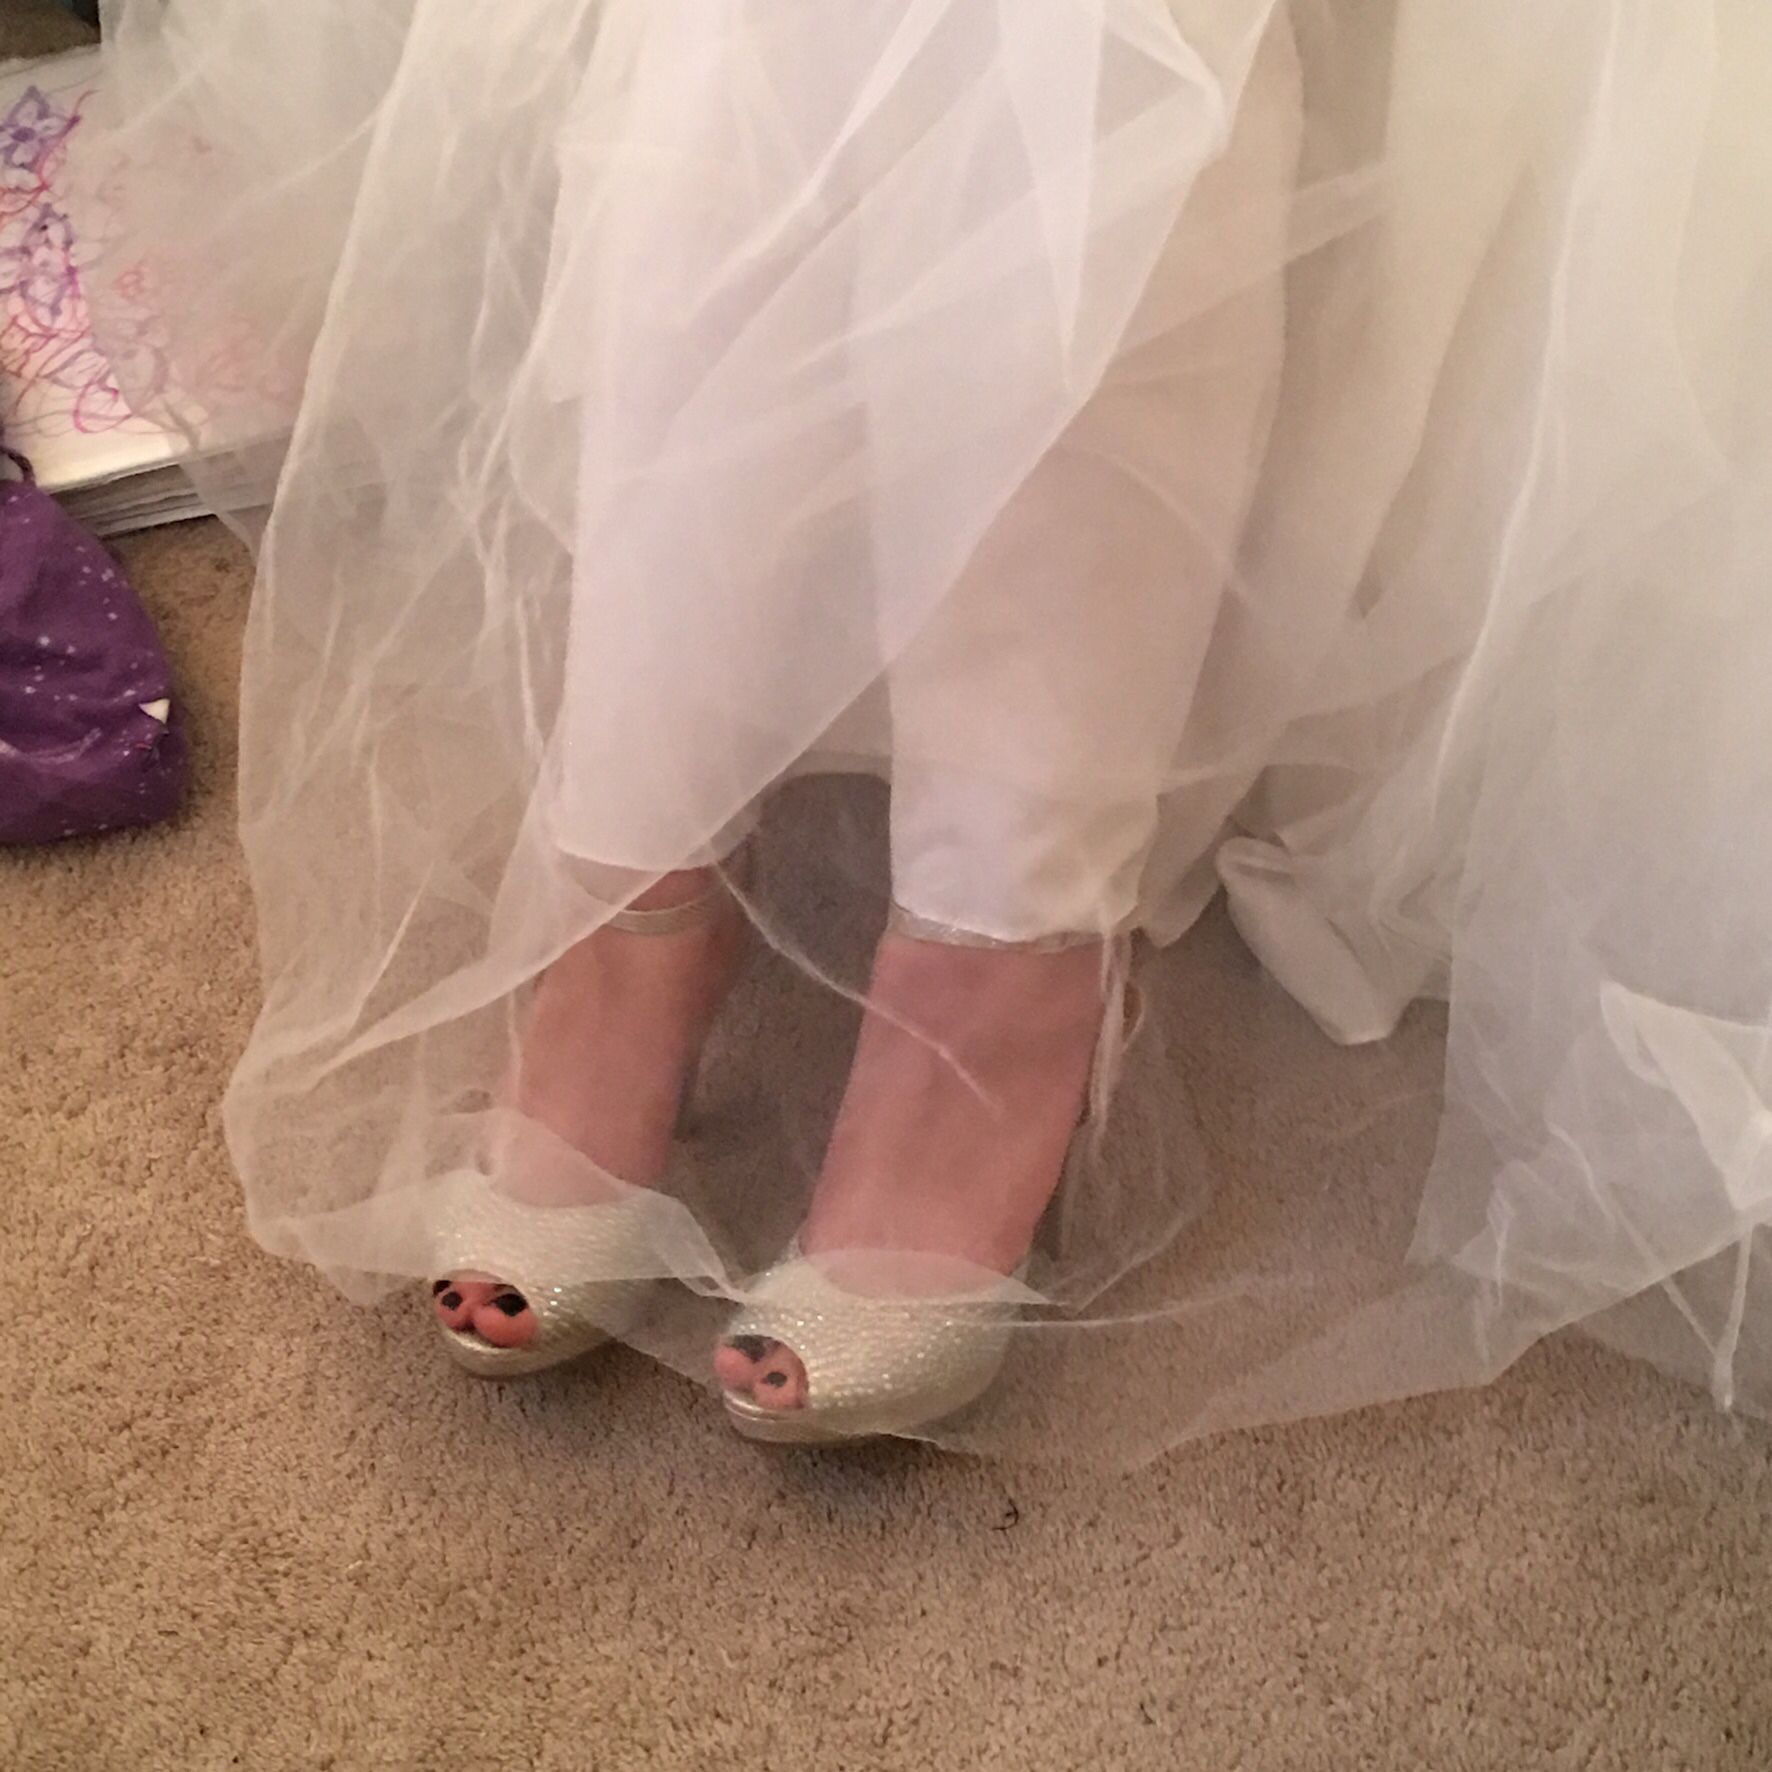 Sweet 16 👗 —wedding dress 👗 size 3 sealed in box